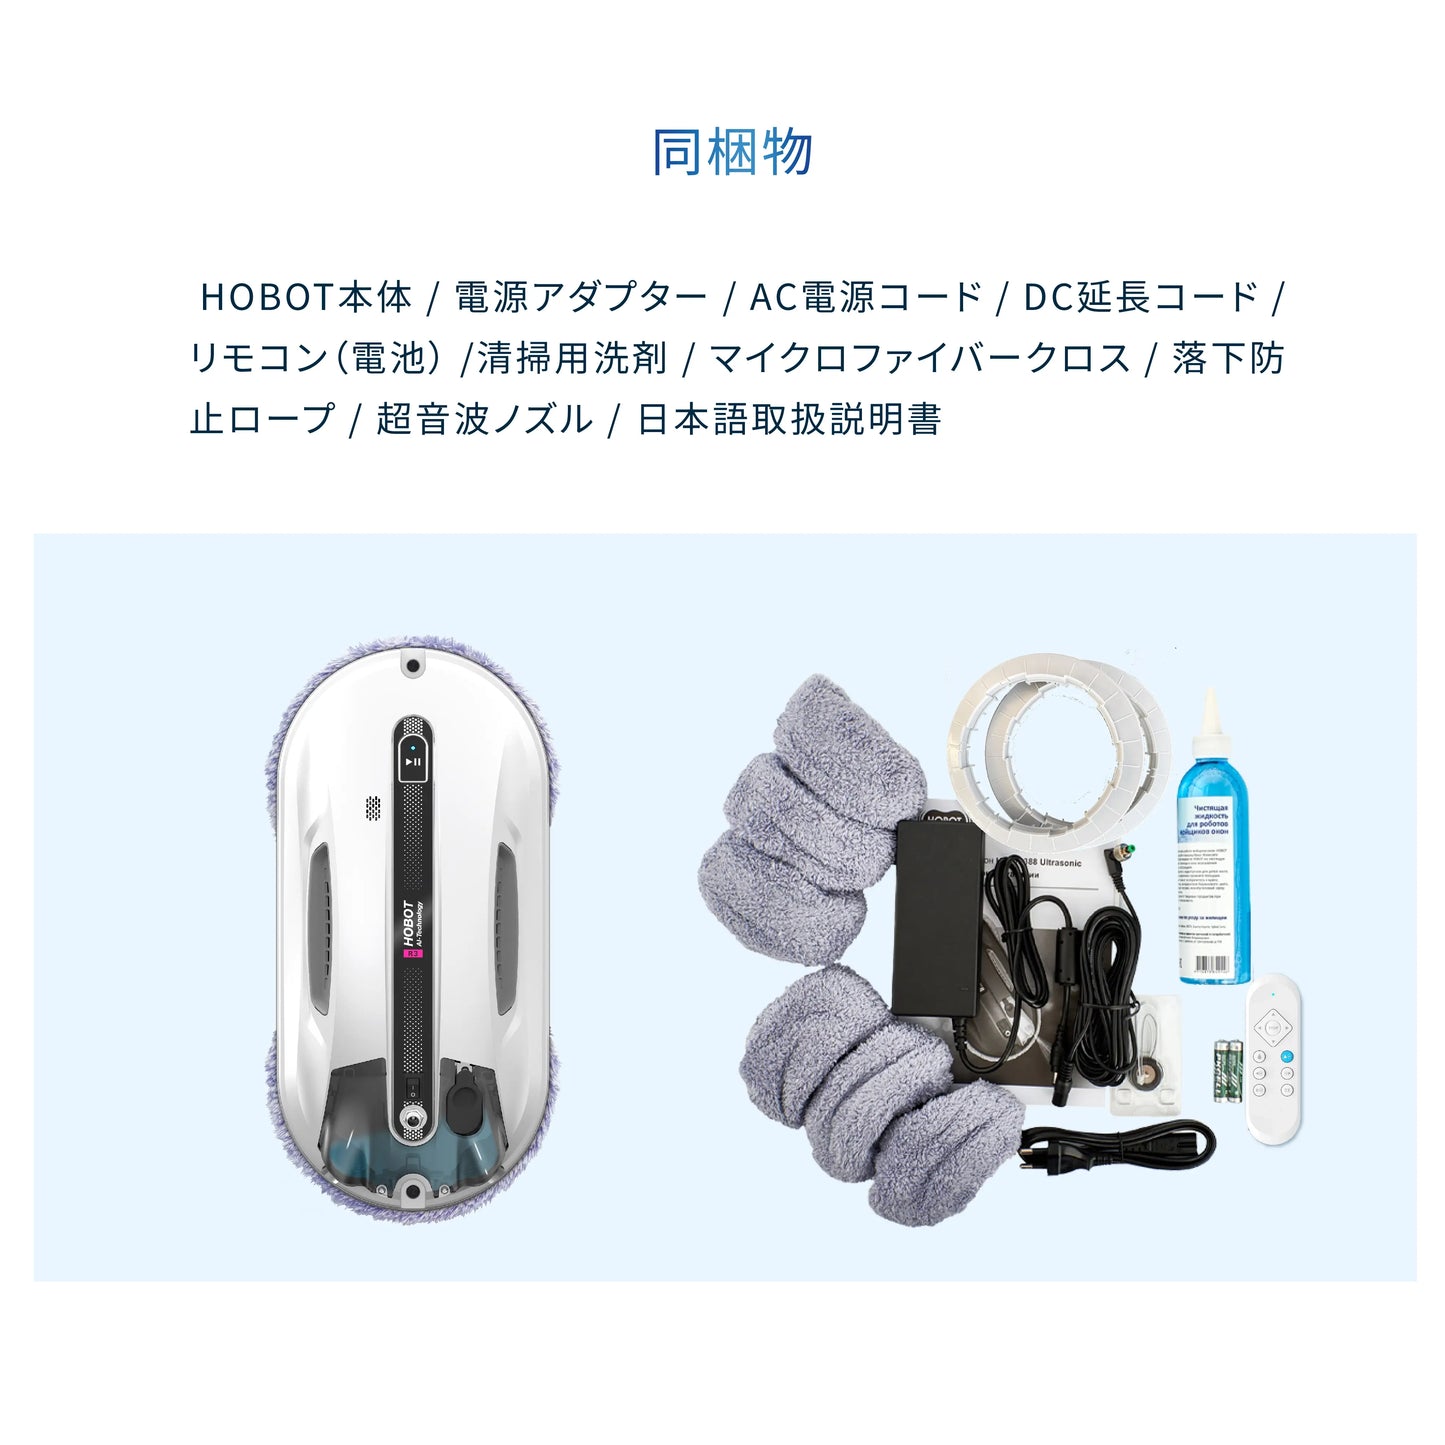 HOBOT-R3 自動窓掃除ロボット eva.gov.co